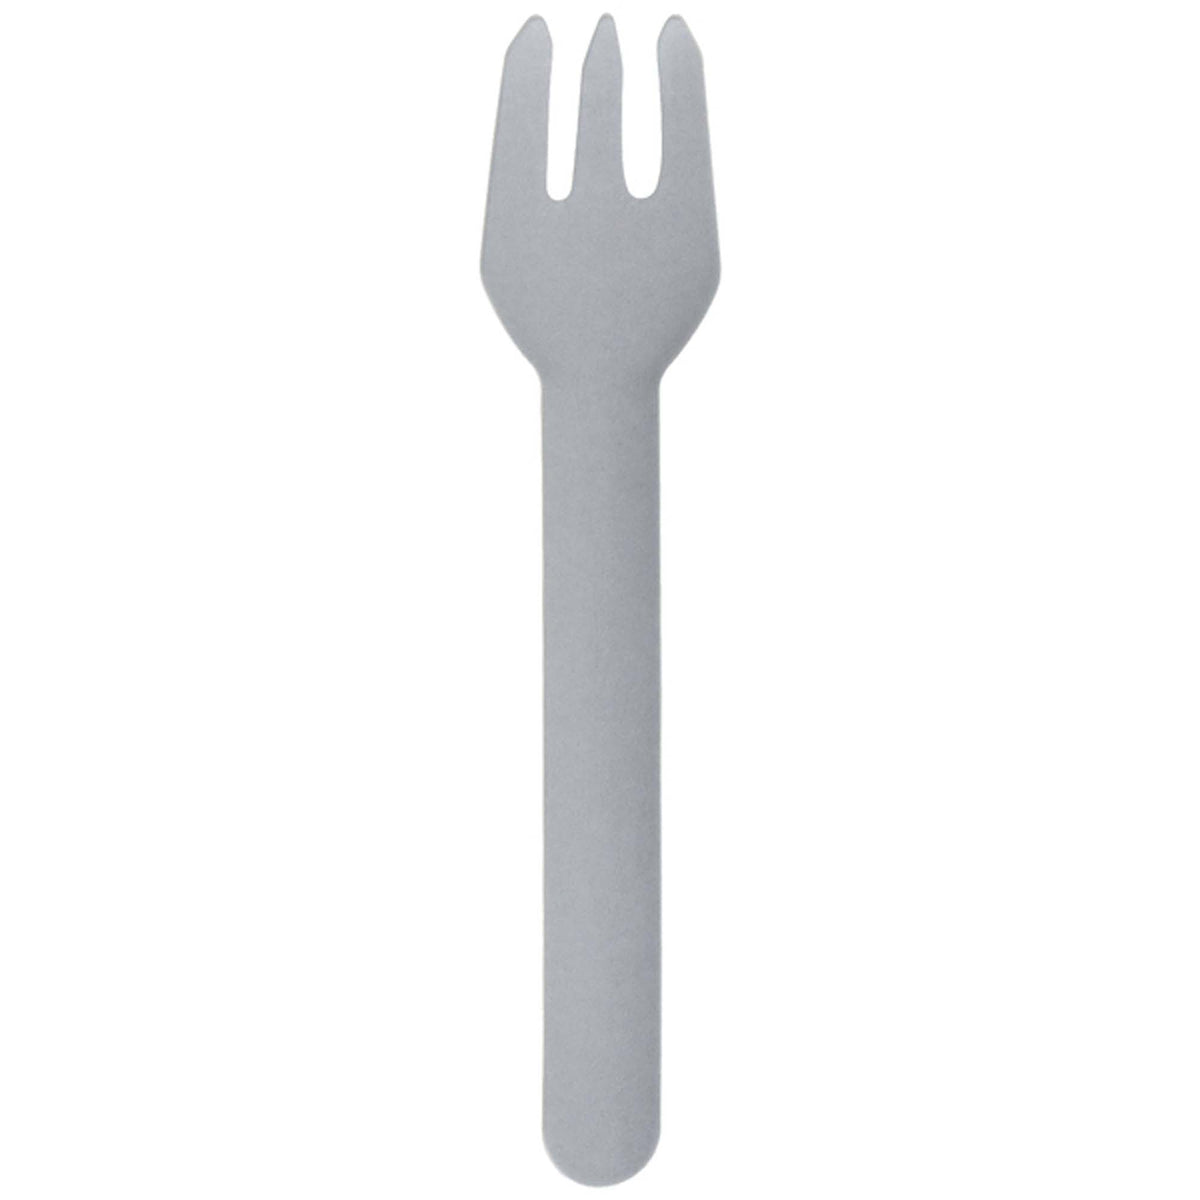 SANTEX Disposable-Plasticware Silver ECO Paper Forks, 10 Count 3660380097938